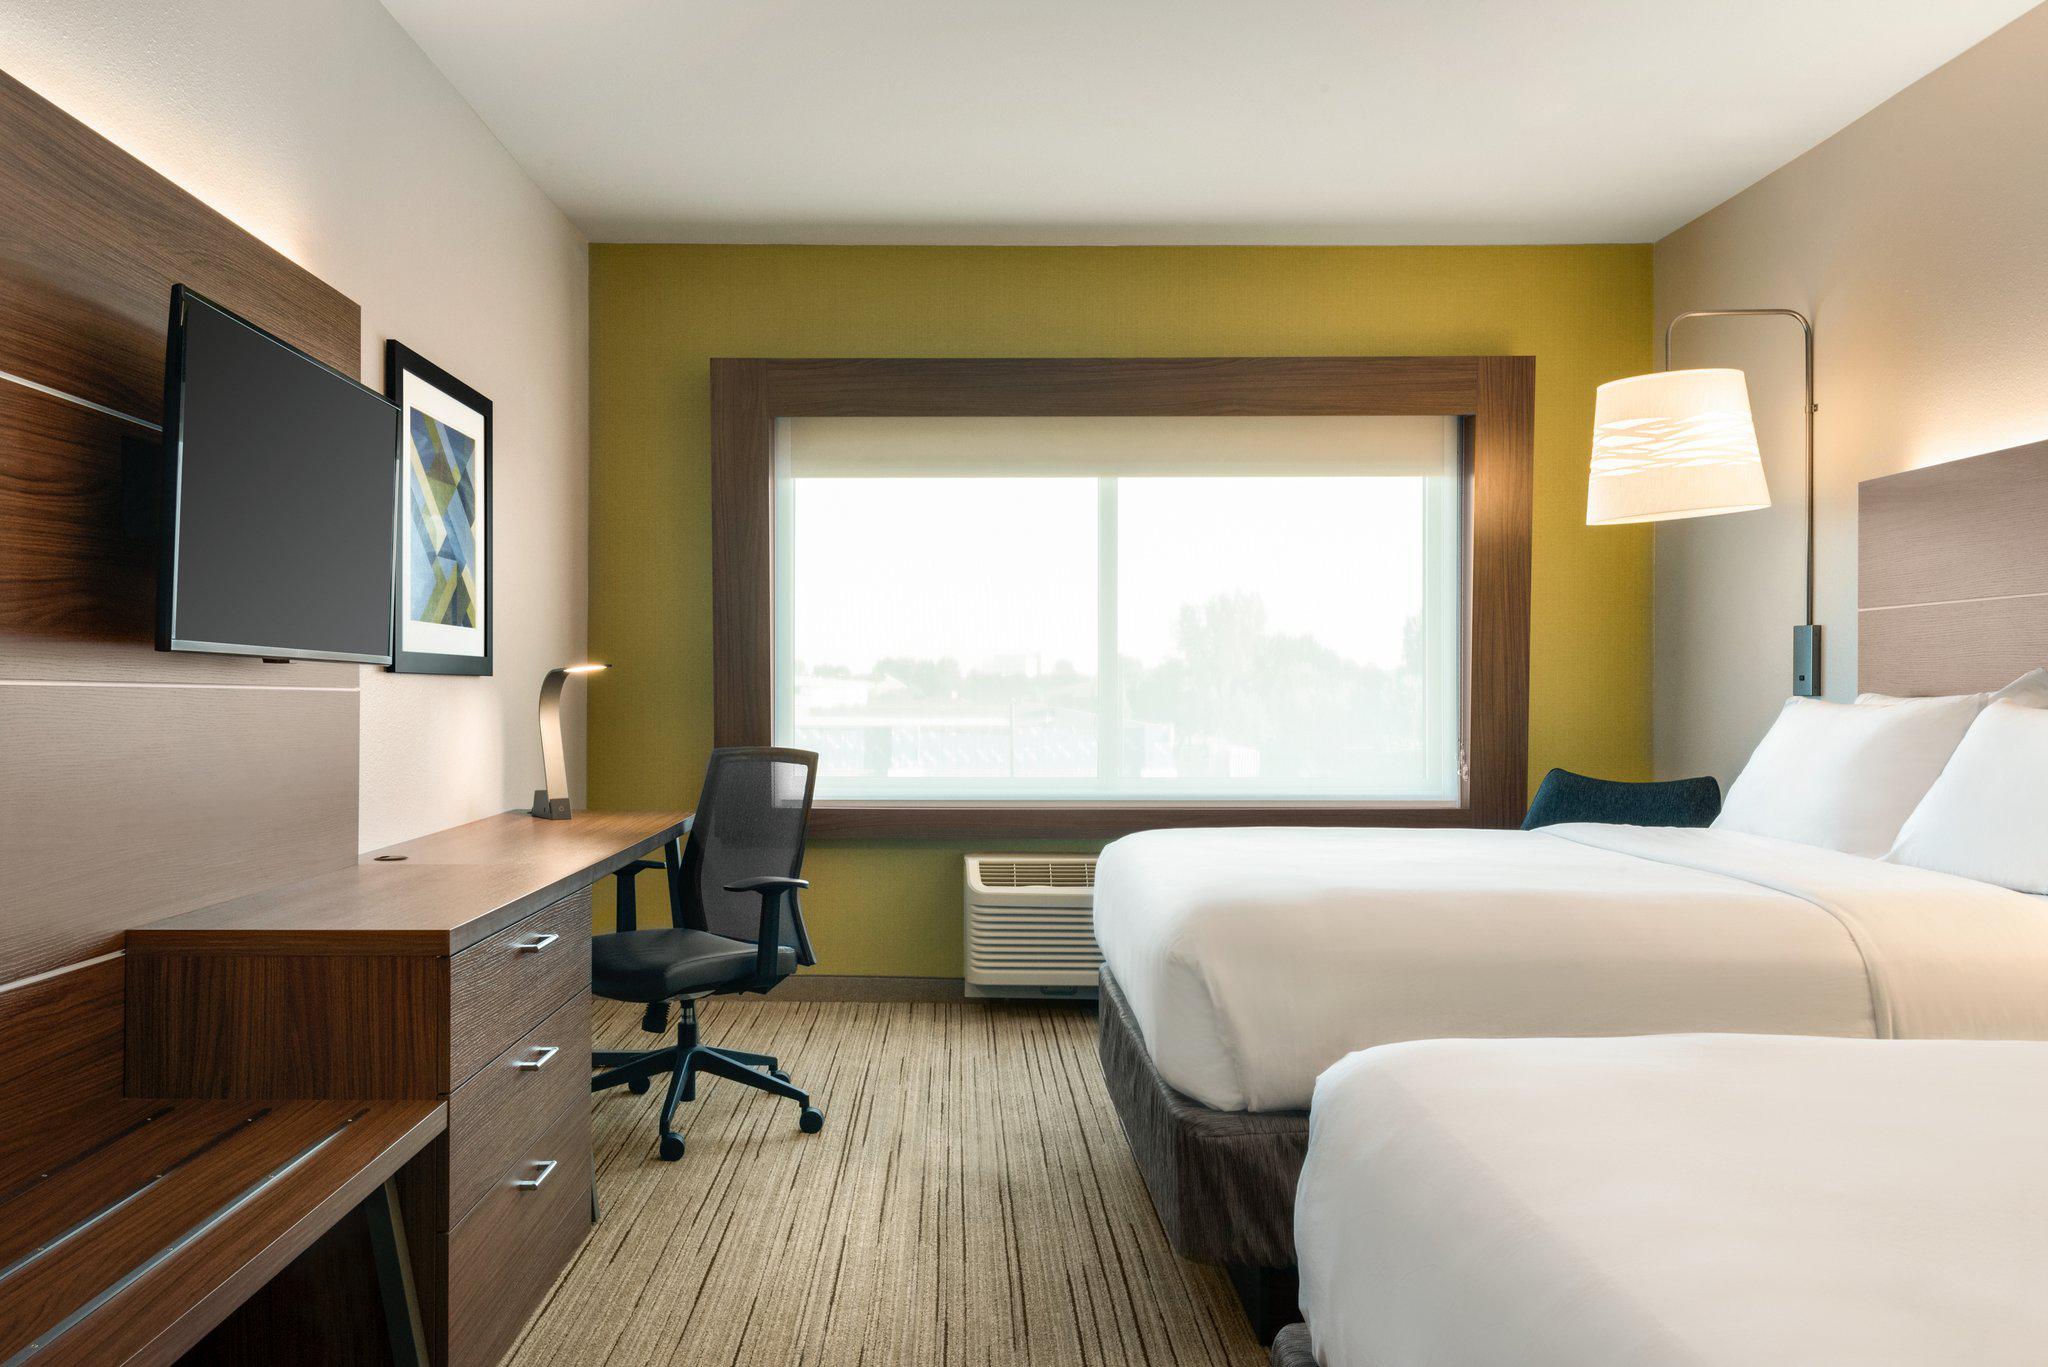 Holiday Inn Express & Suites West Des Moines - Jordan West Photo